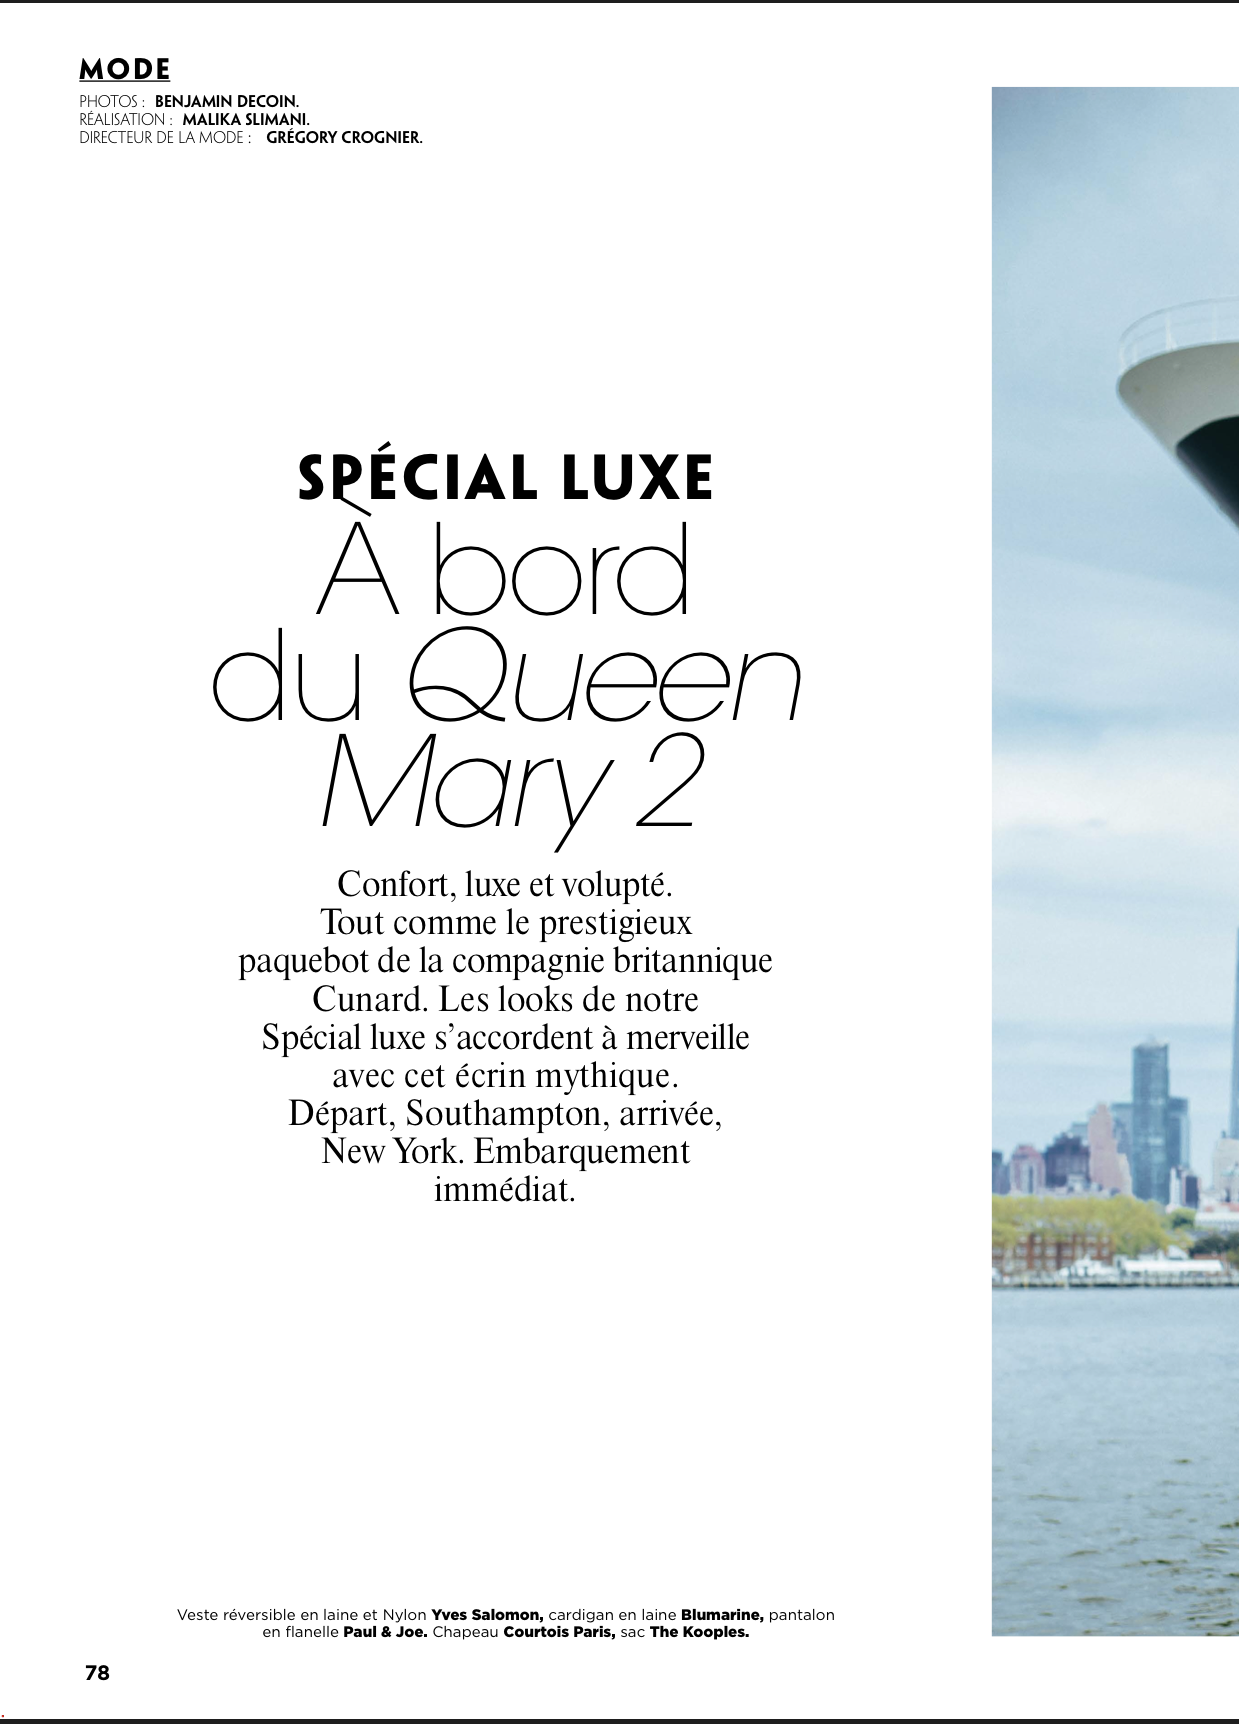 gala editorial special luxe chapeau courtois paris